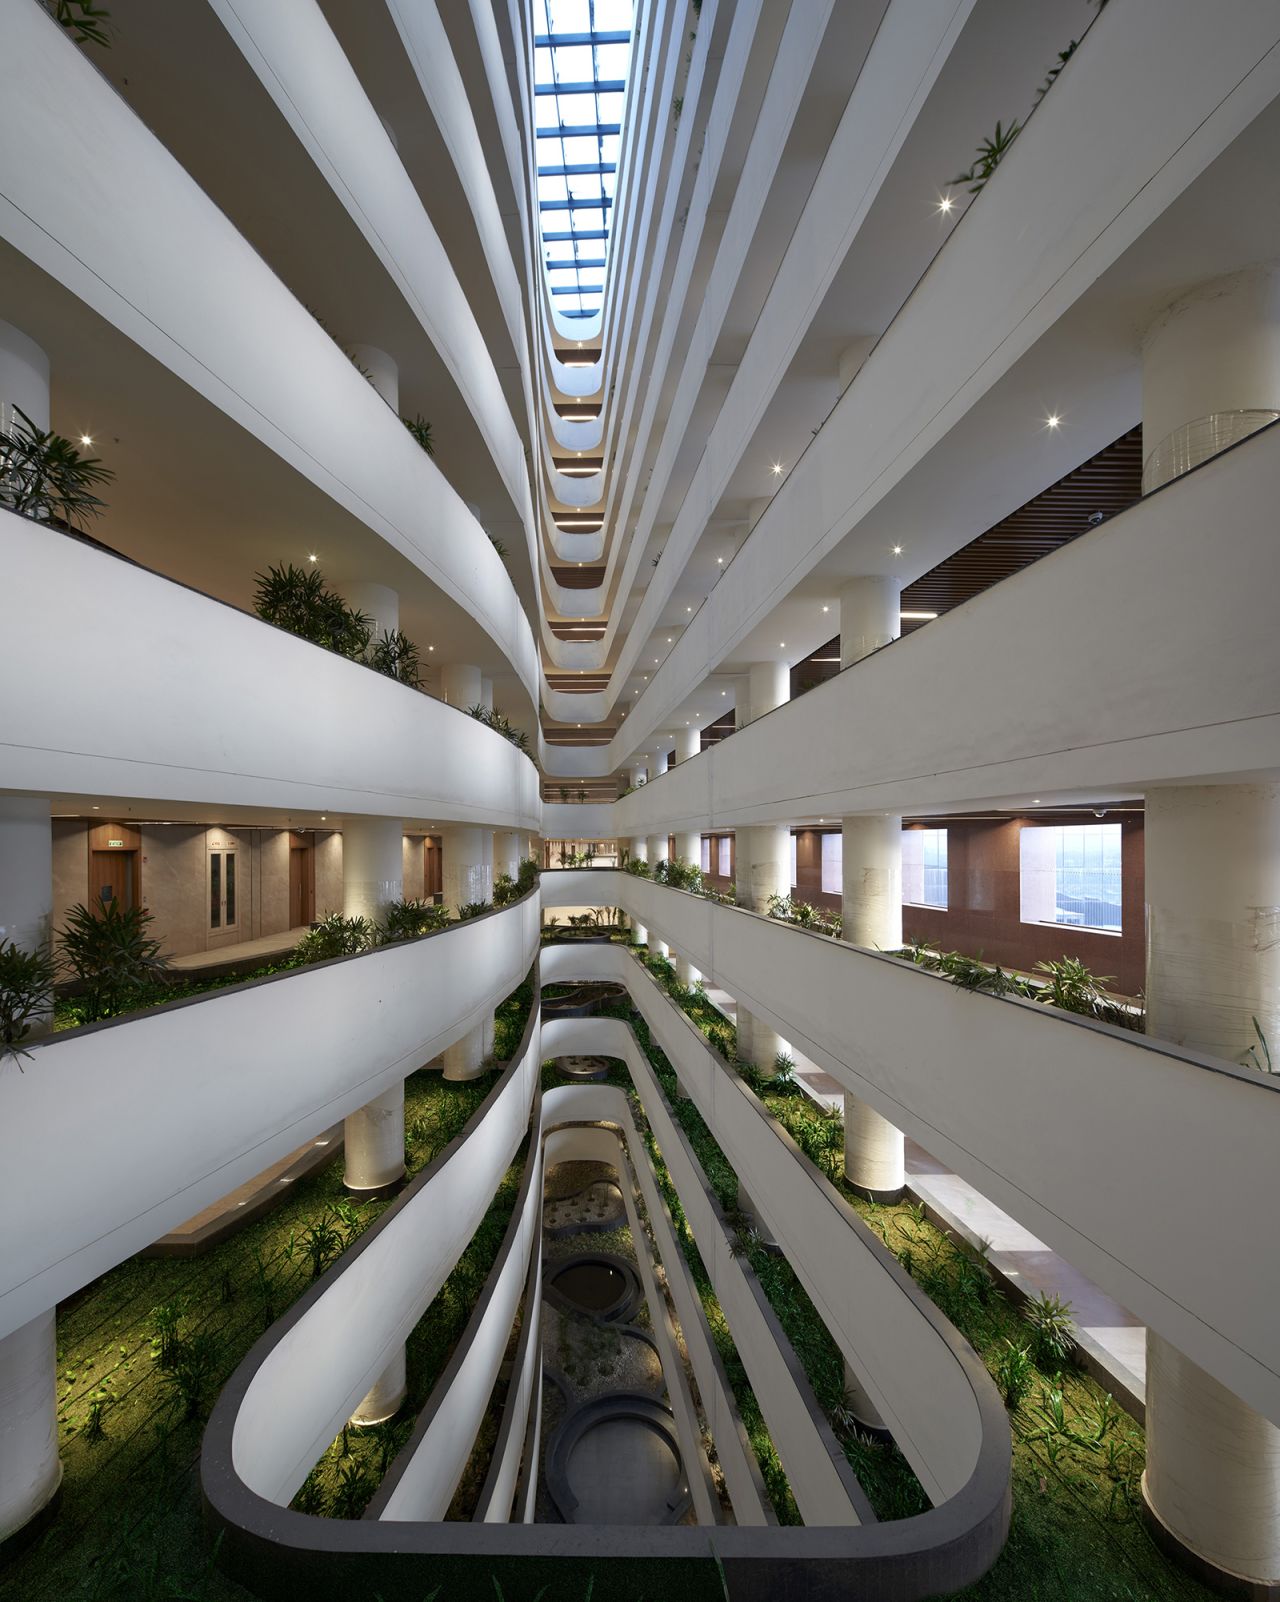 The building's atriums were designed to encourage natural ventilation through the building.